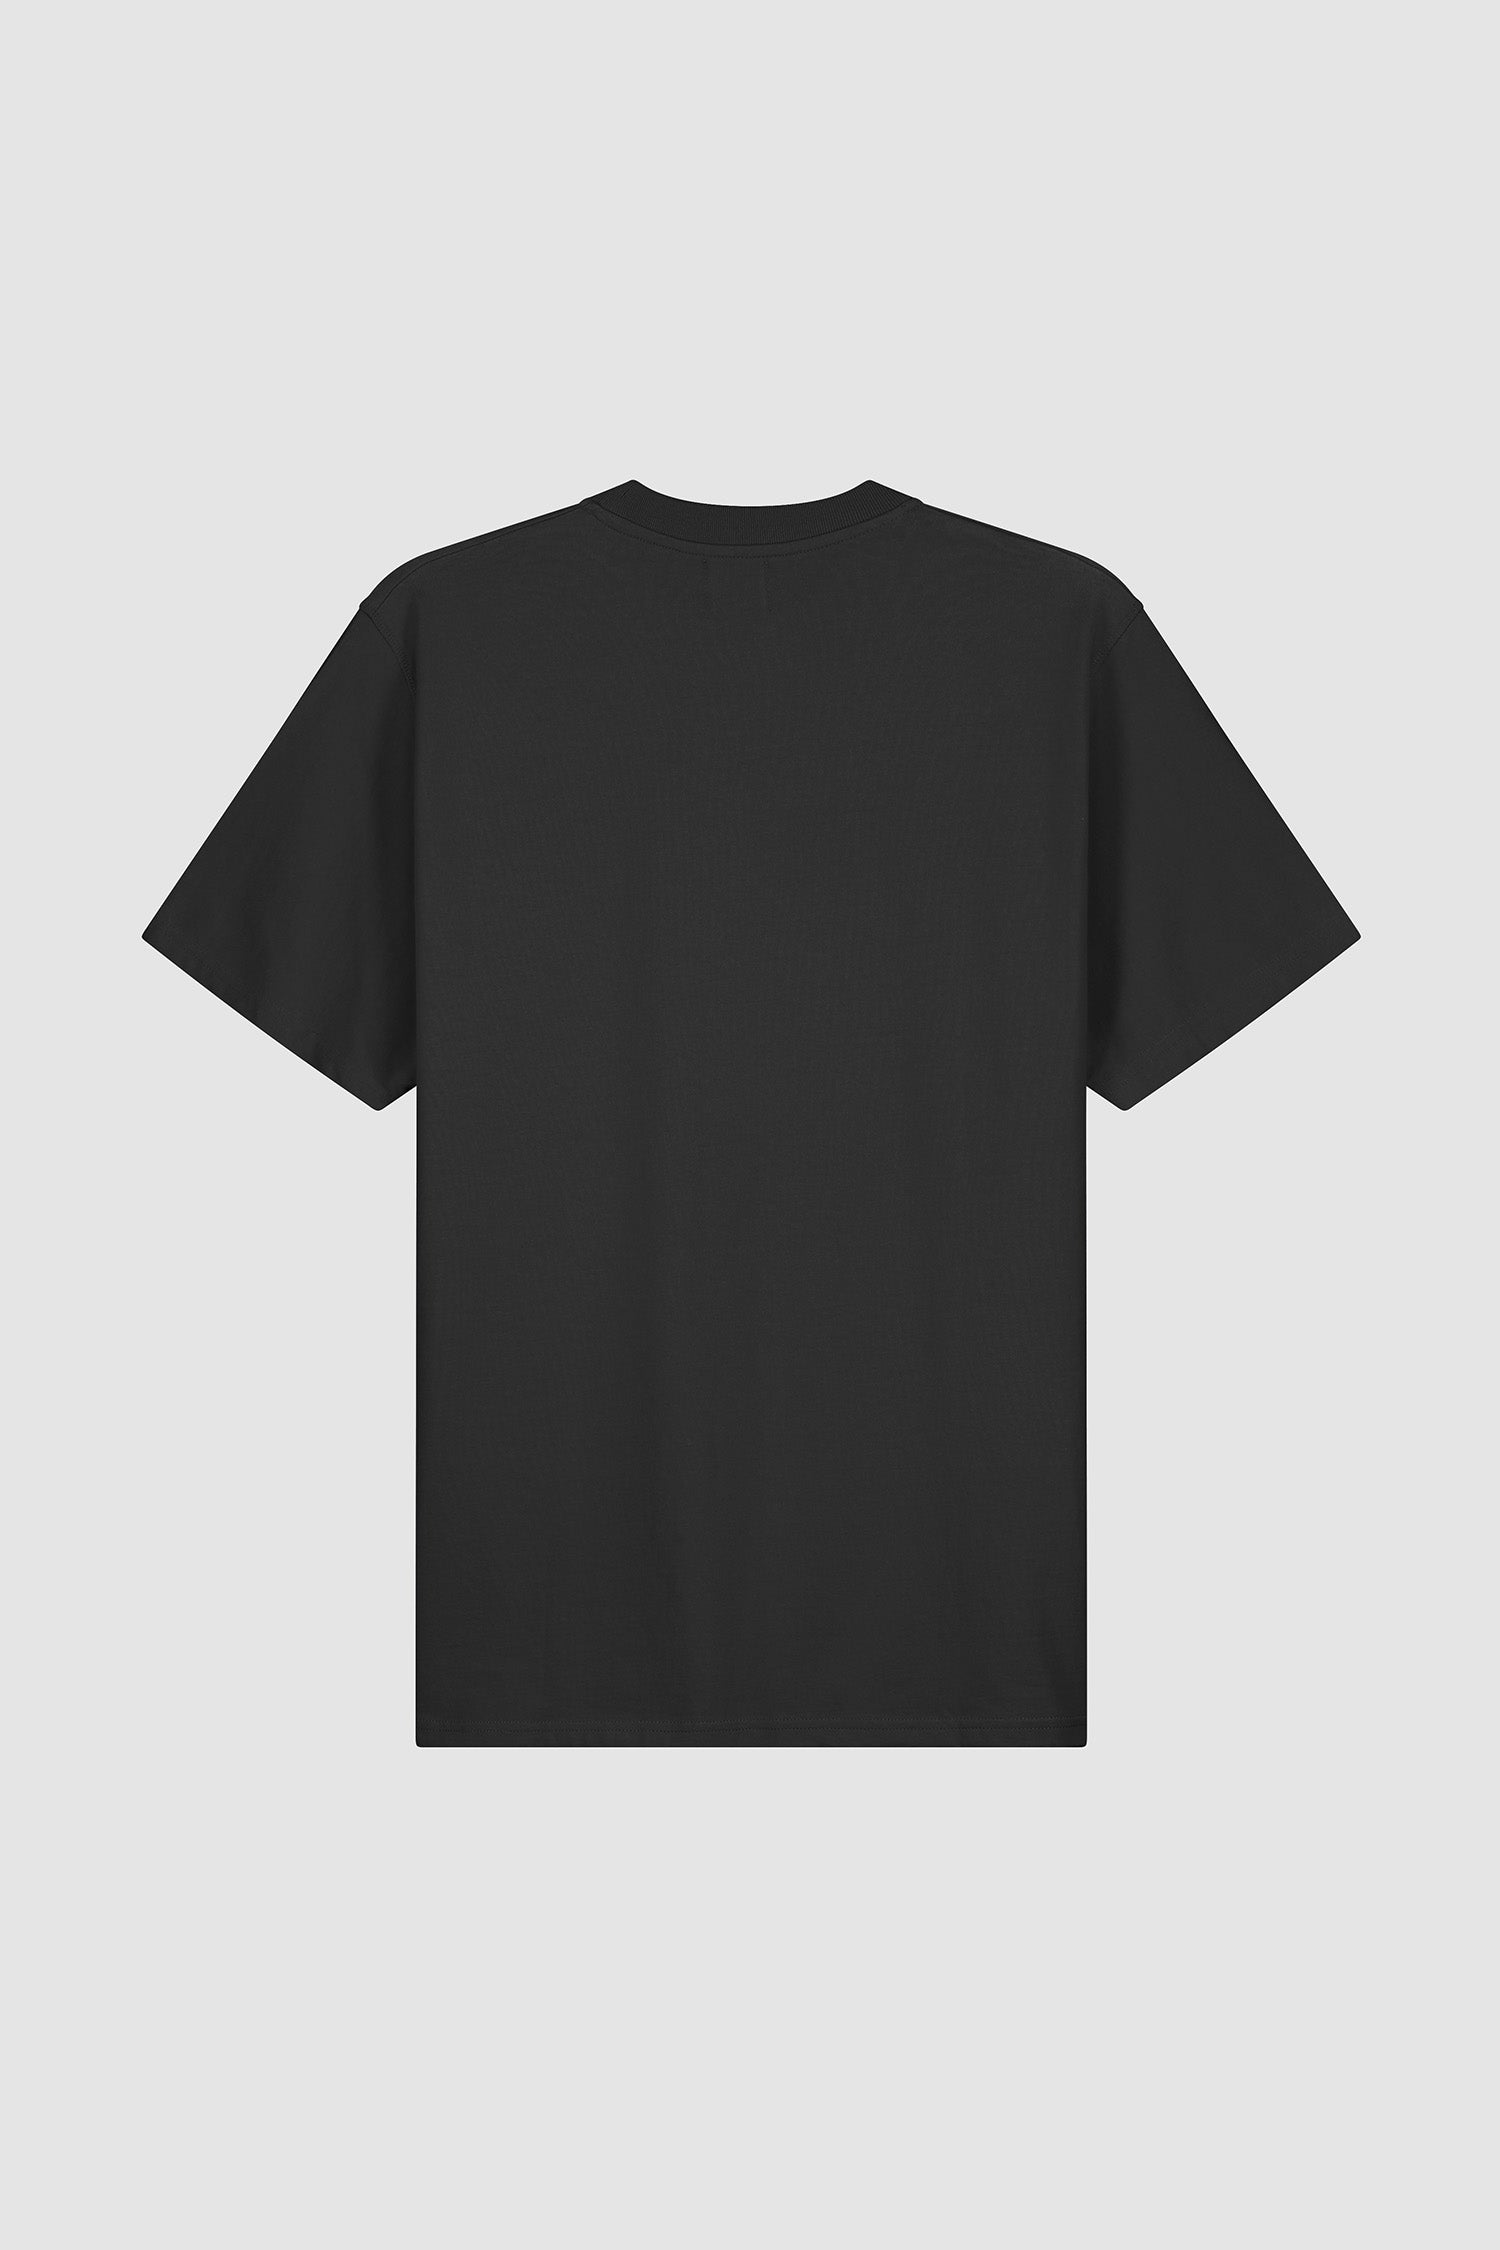 Rarri T-shirt - Black